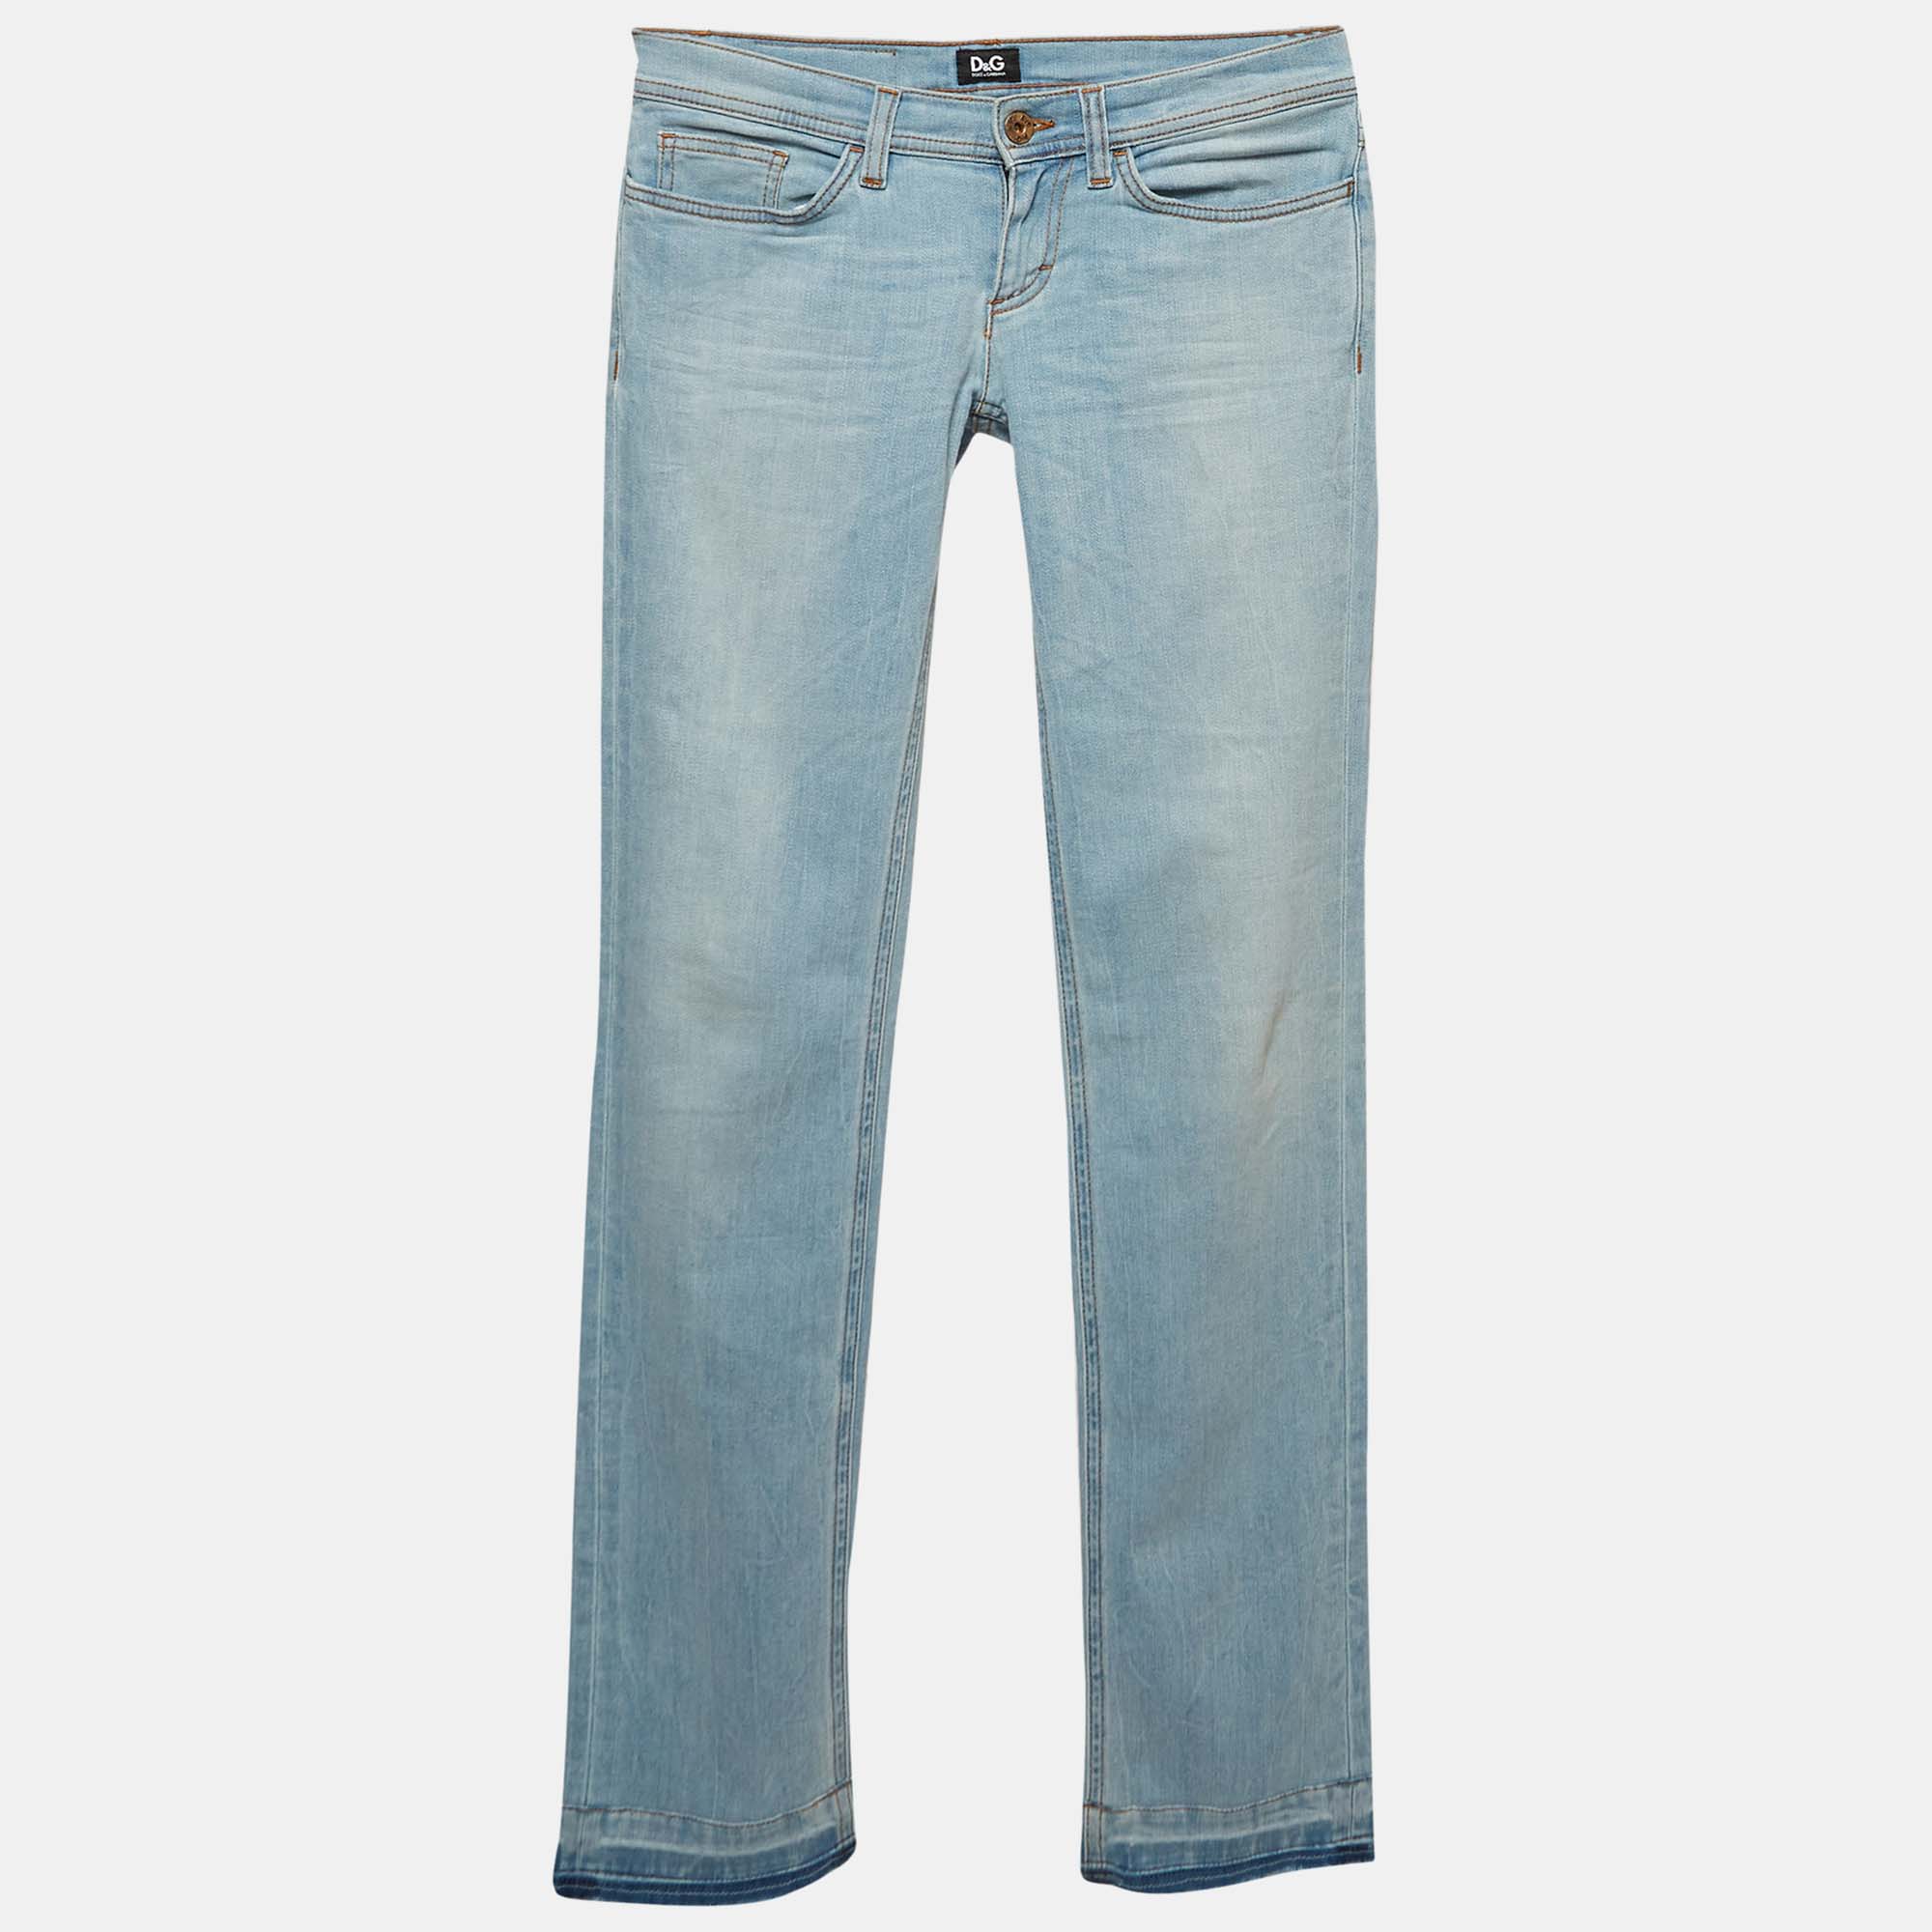 

D&G Blue Washed Denim Low Waist Tight Fit Jeans S Waist 25"